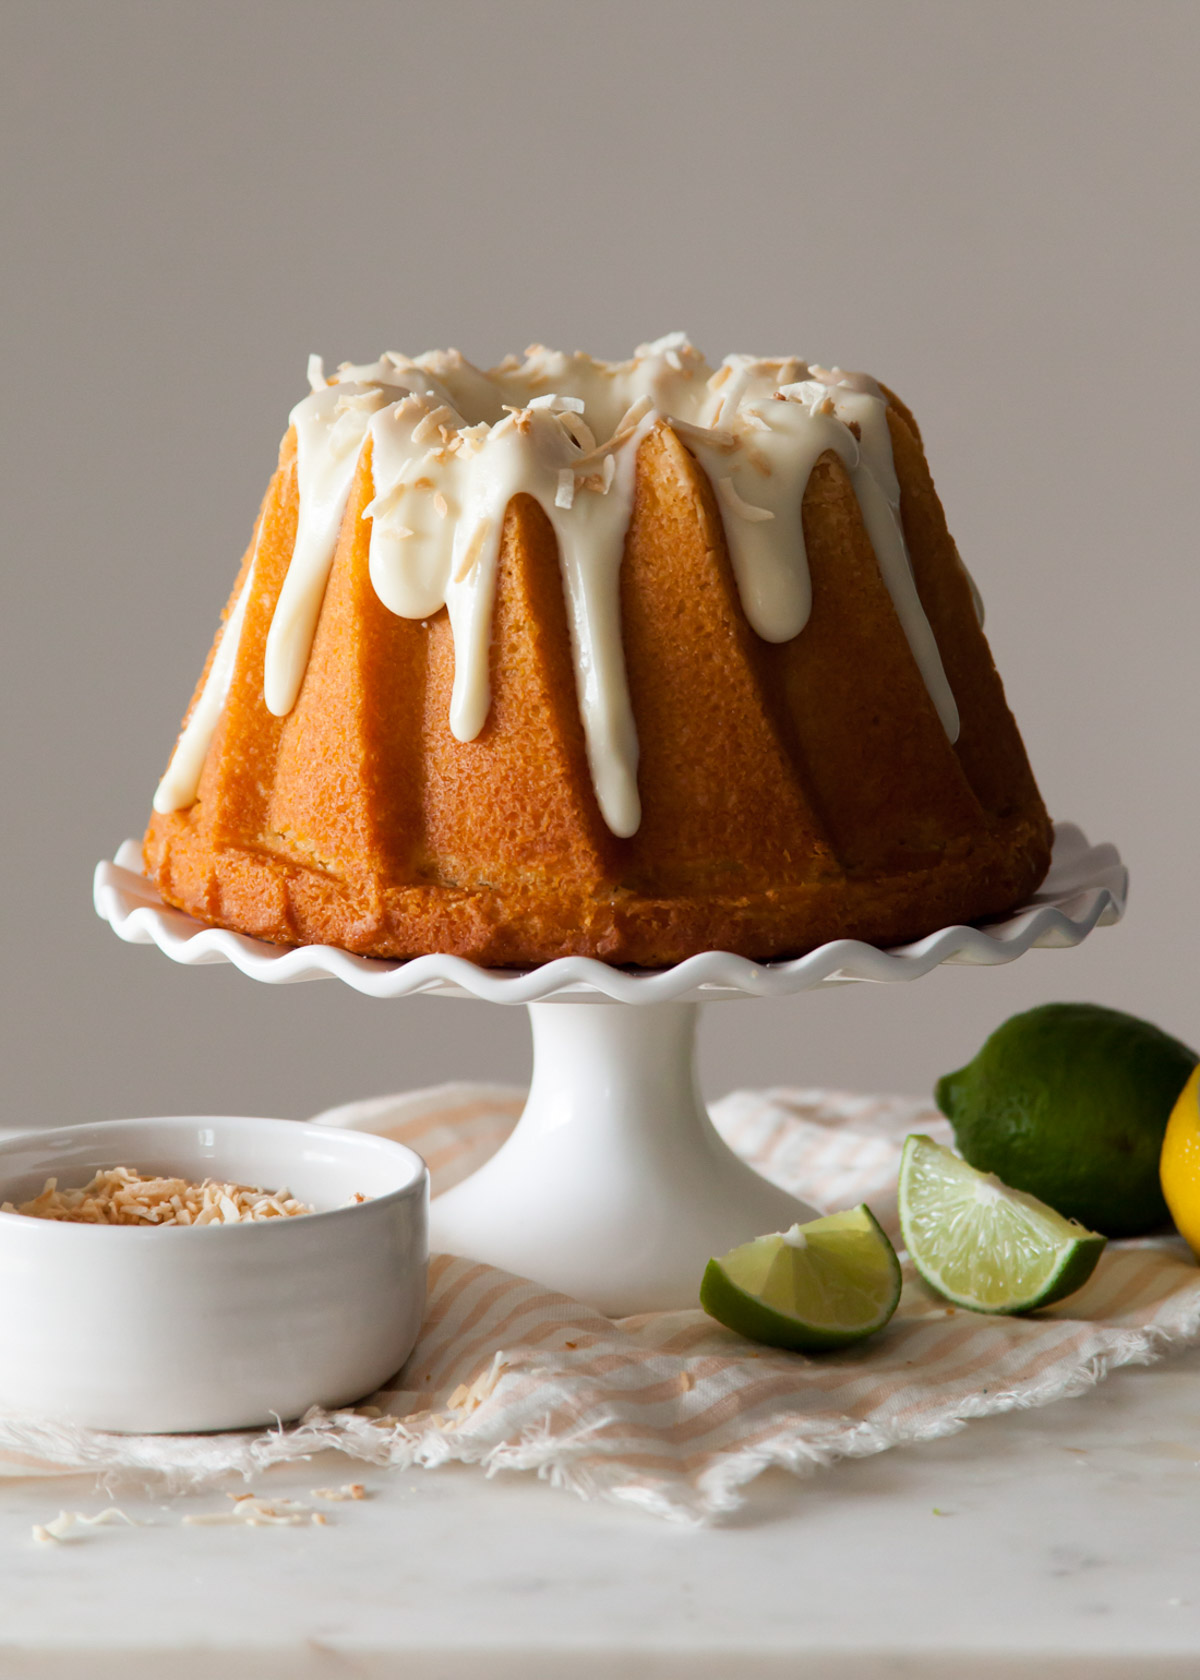 A lemon bundt cake with coconut icing.